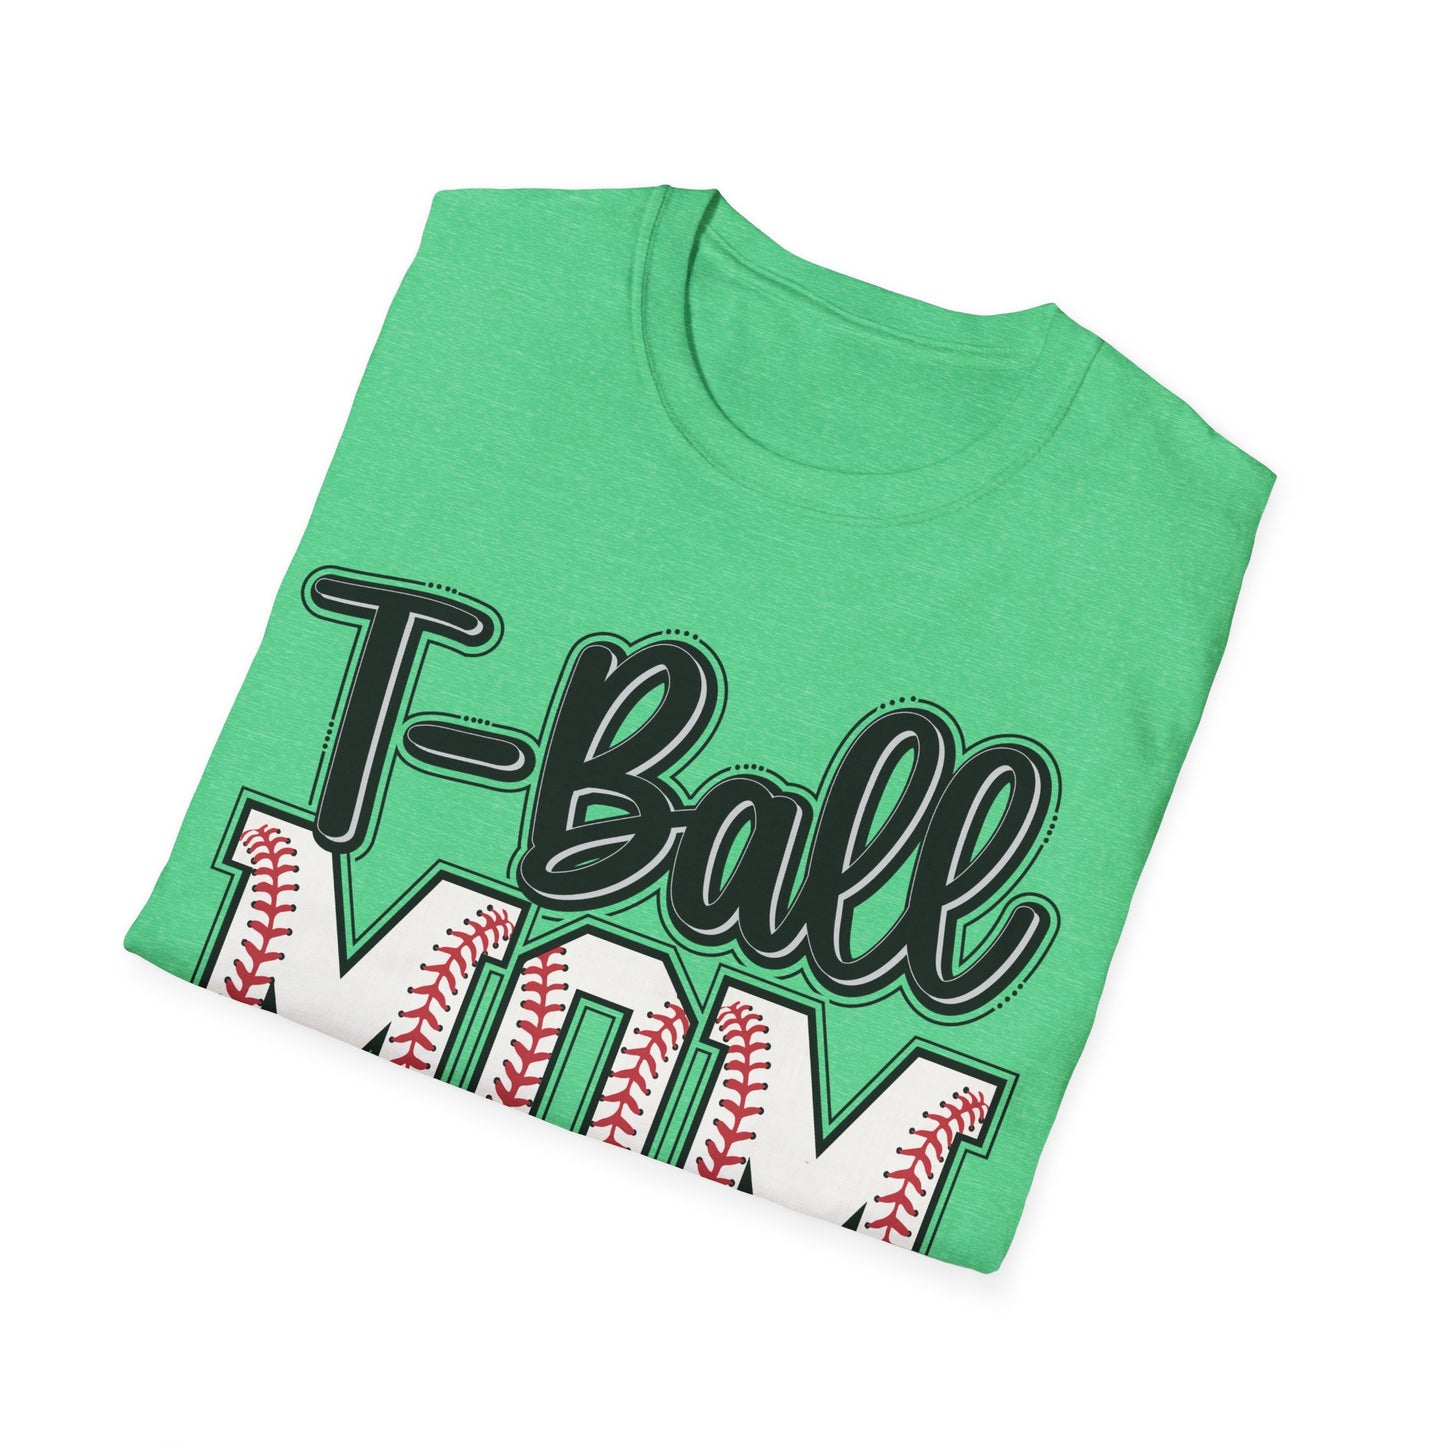 Unisex Softstyle T-Shirt - T-Ball Mom 2